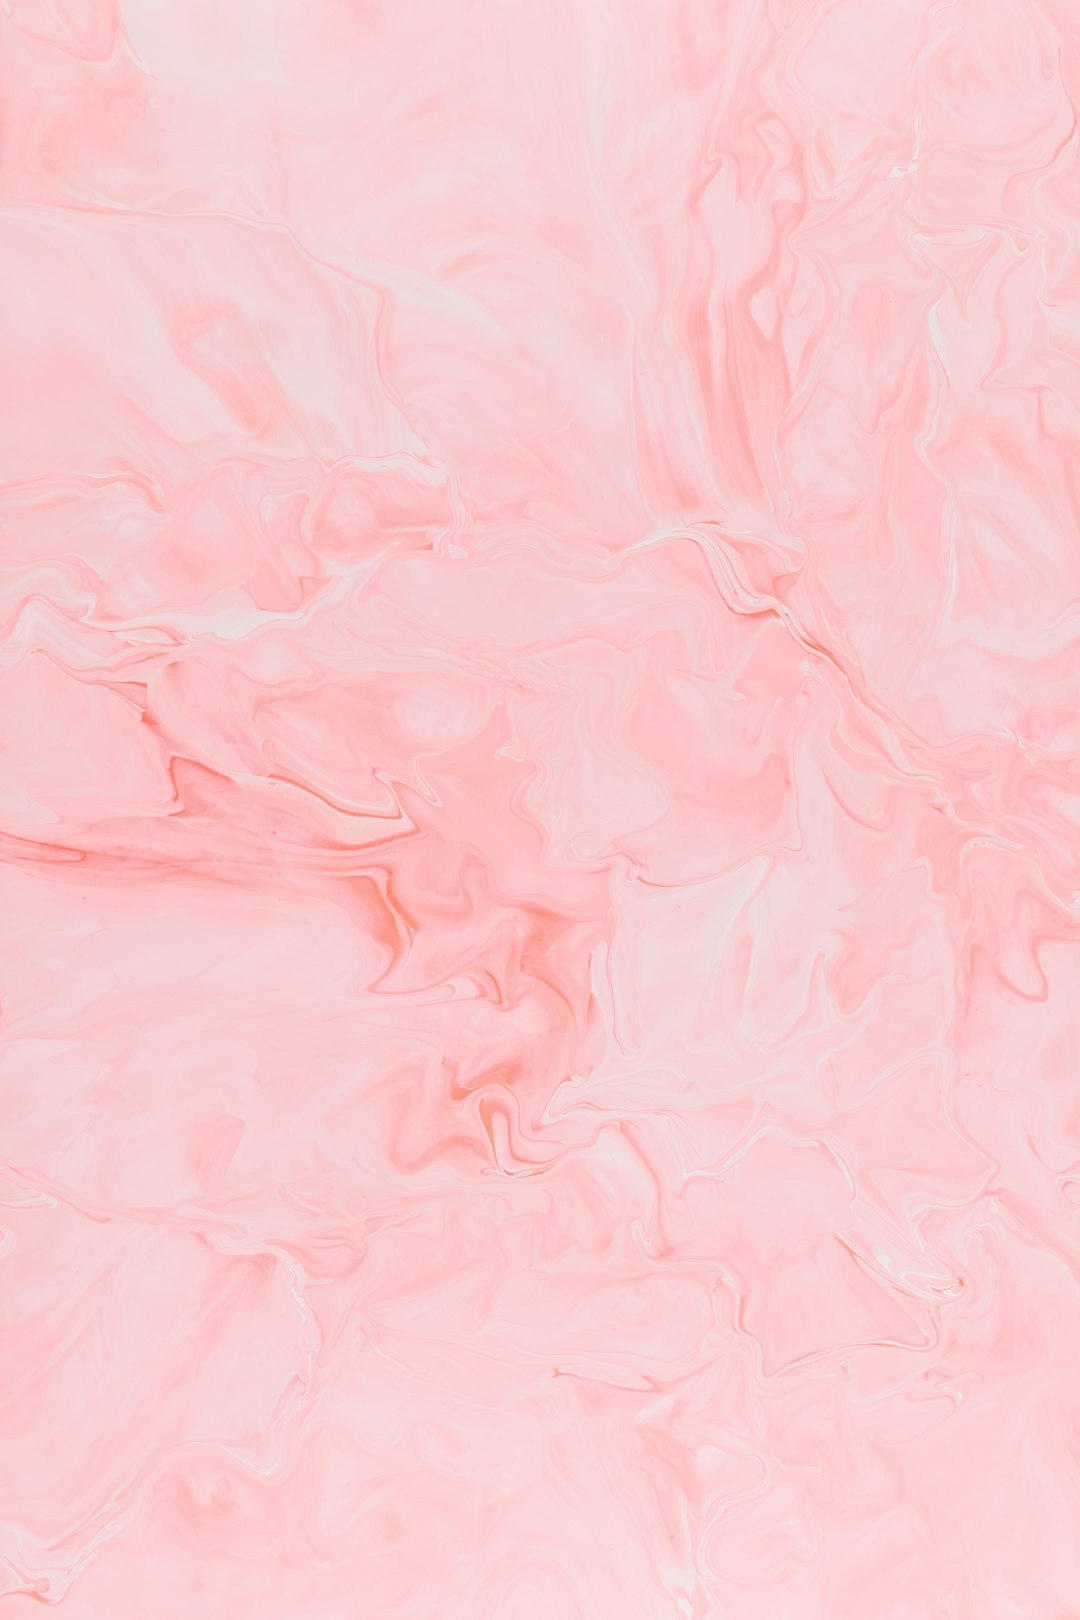 Pink Wallpapers: Free HD Download [12+ HQ]  Unsplash